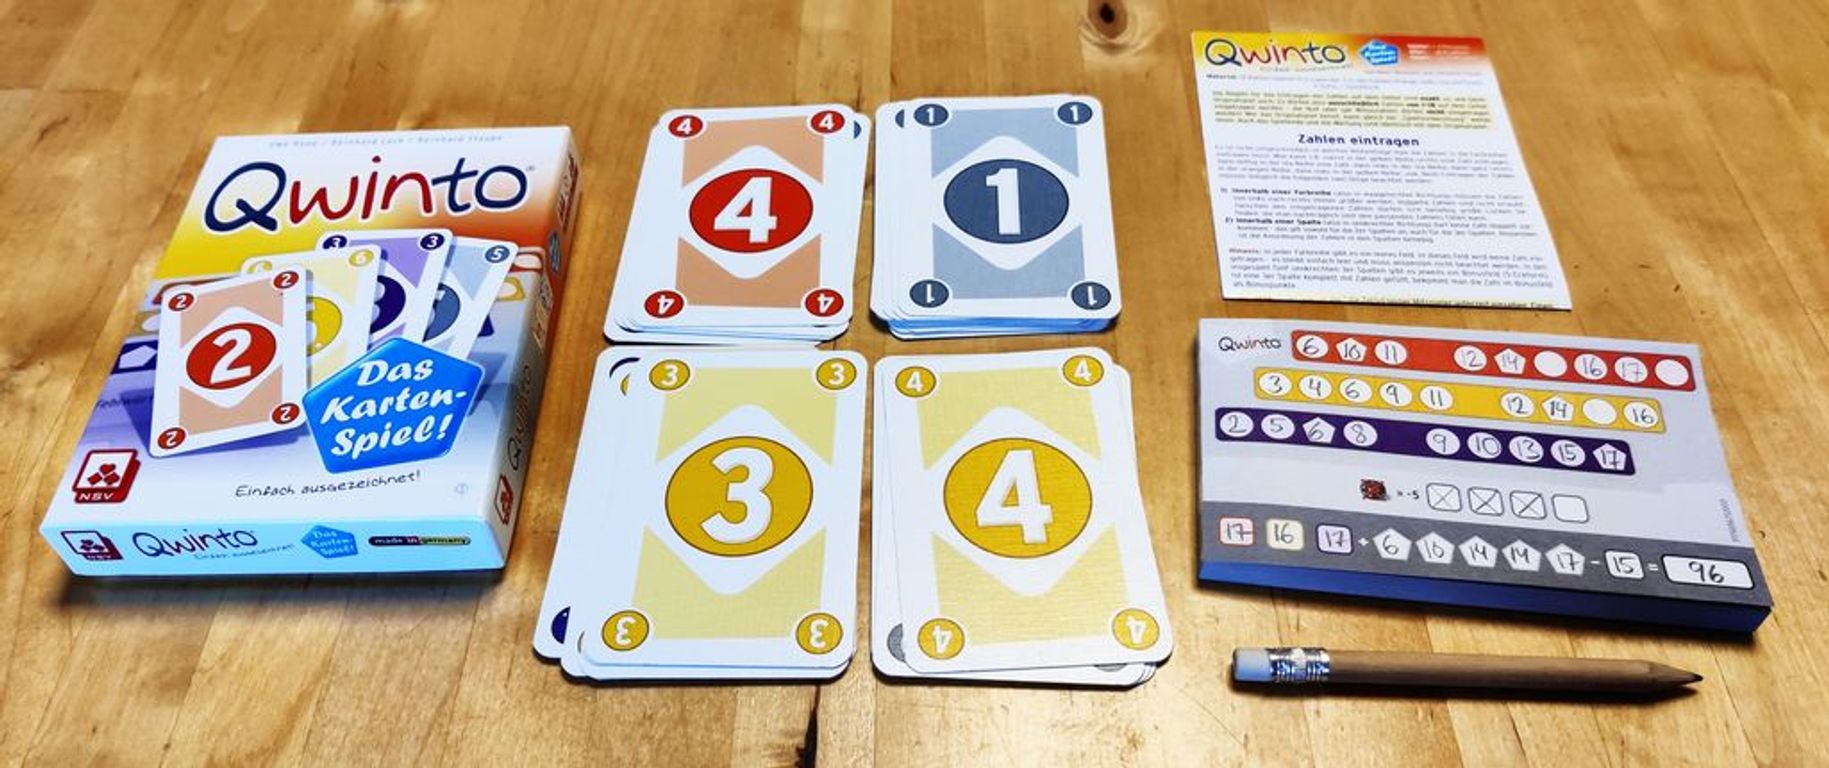 Qwinto: Das Kartenspiel komponenten